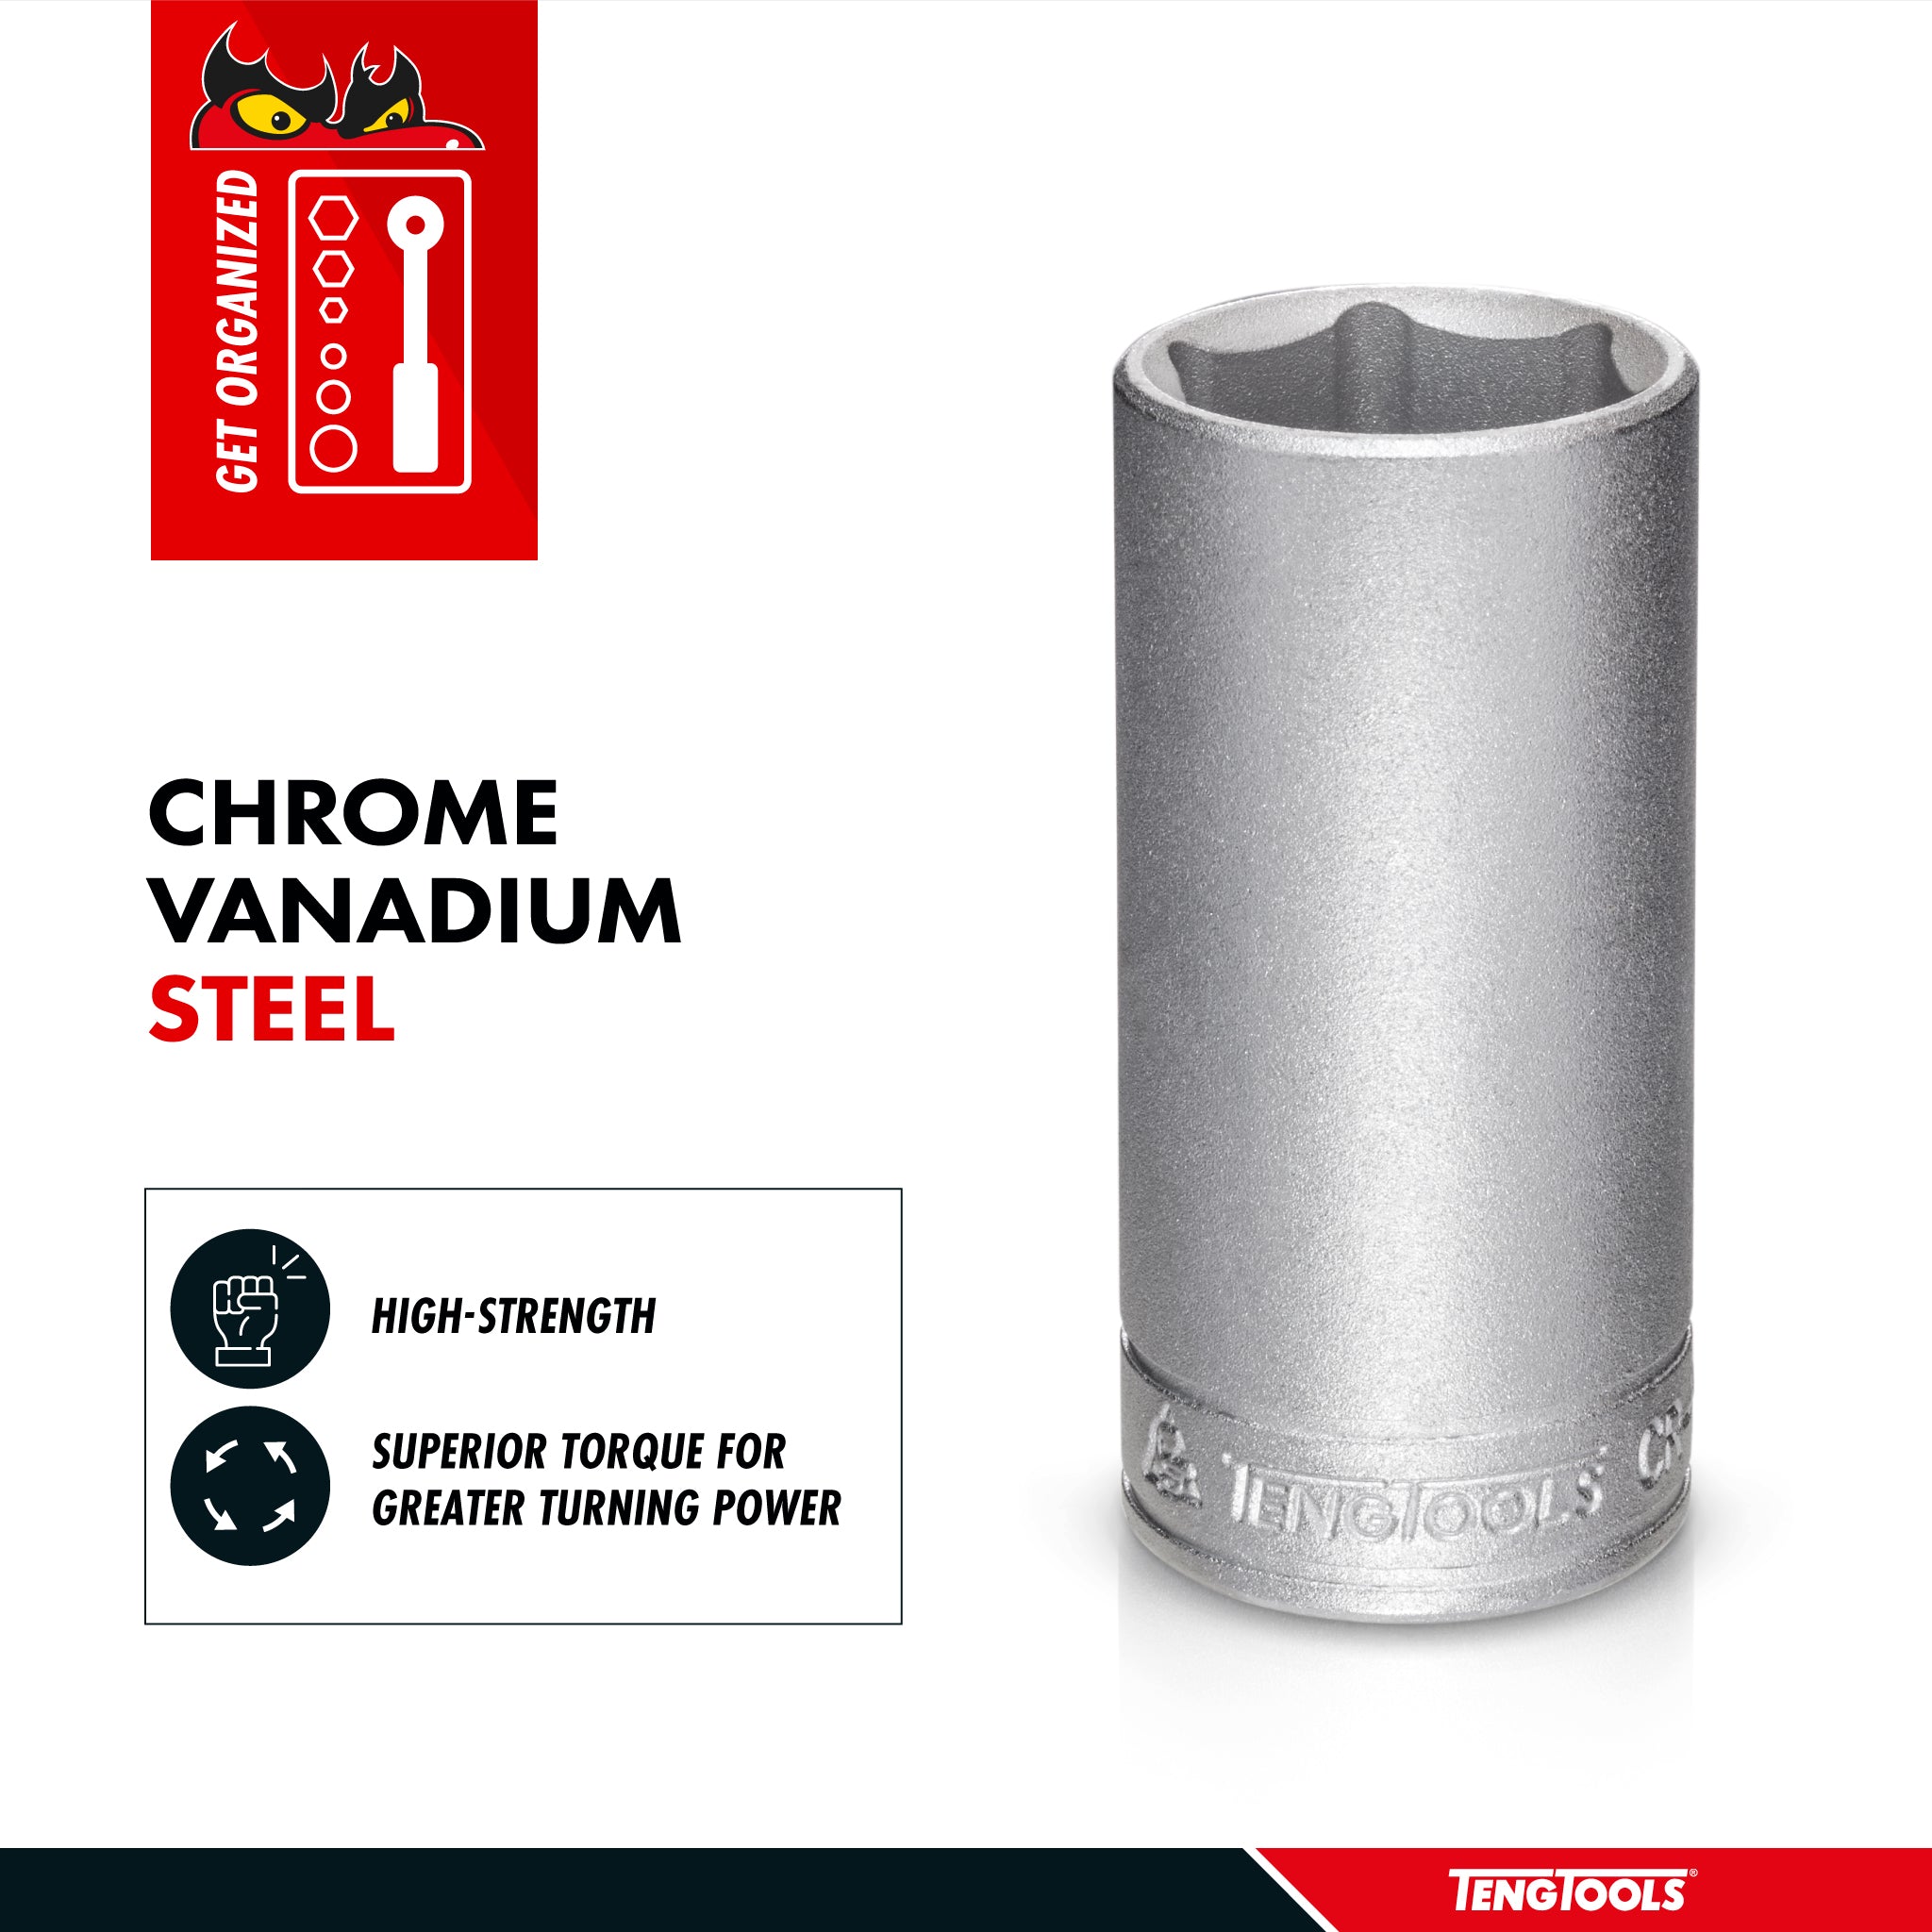 Teng Tools 6 Point SAE Deep 1/4 Inch Drive Chrome Vanadium Sockets - 5/16